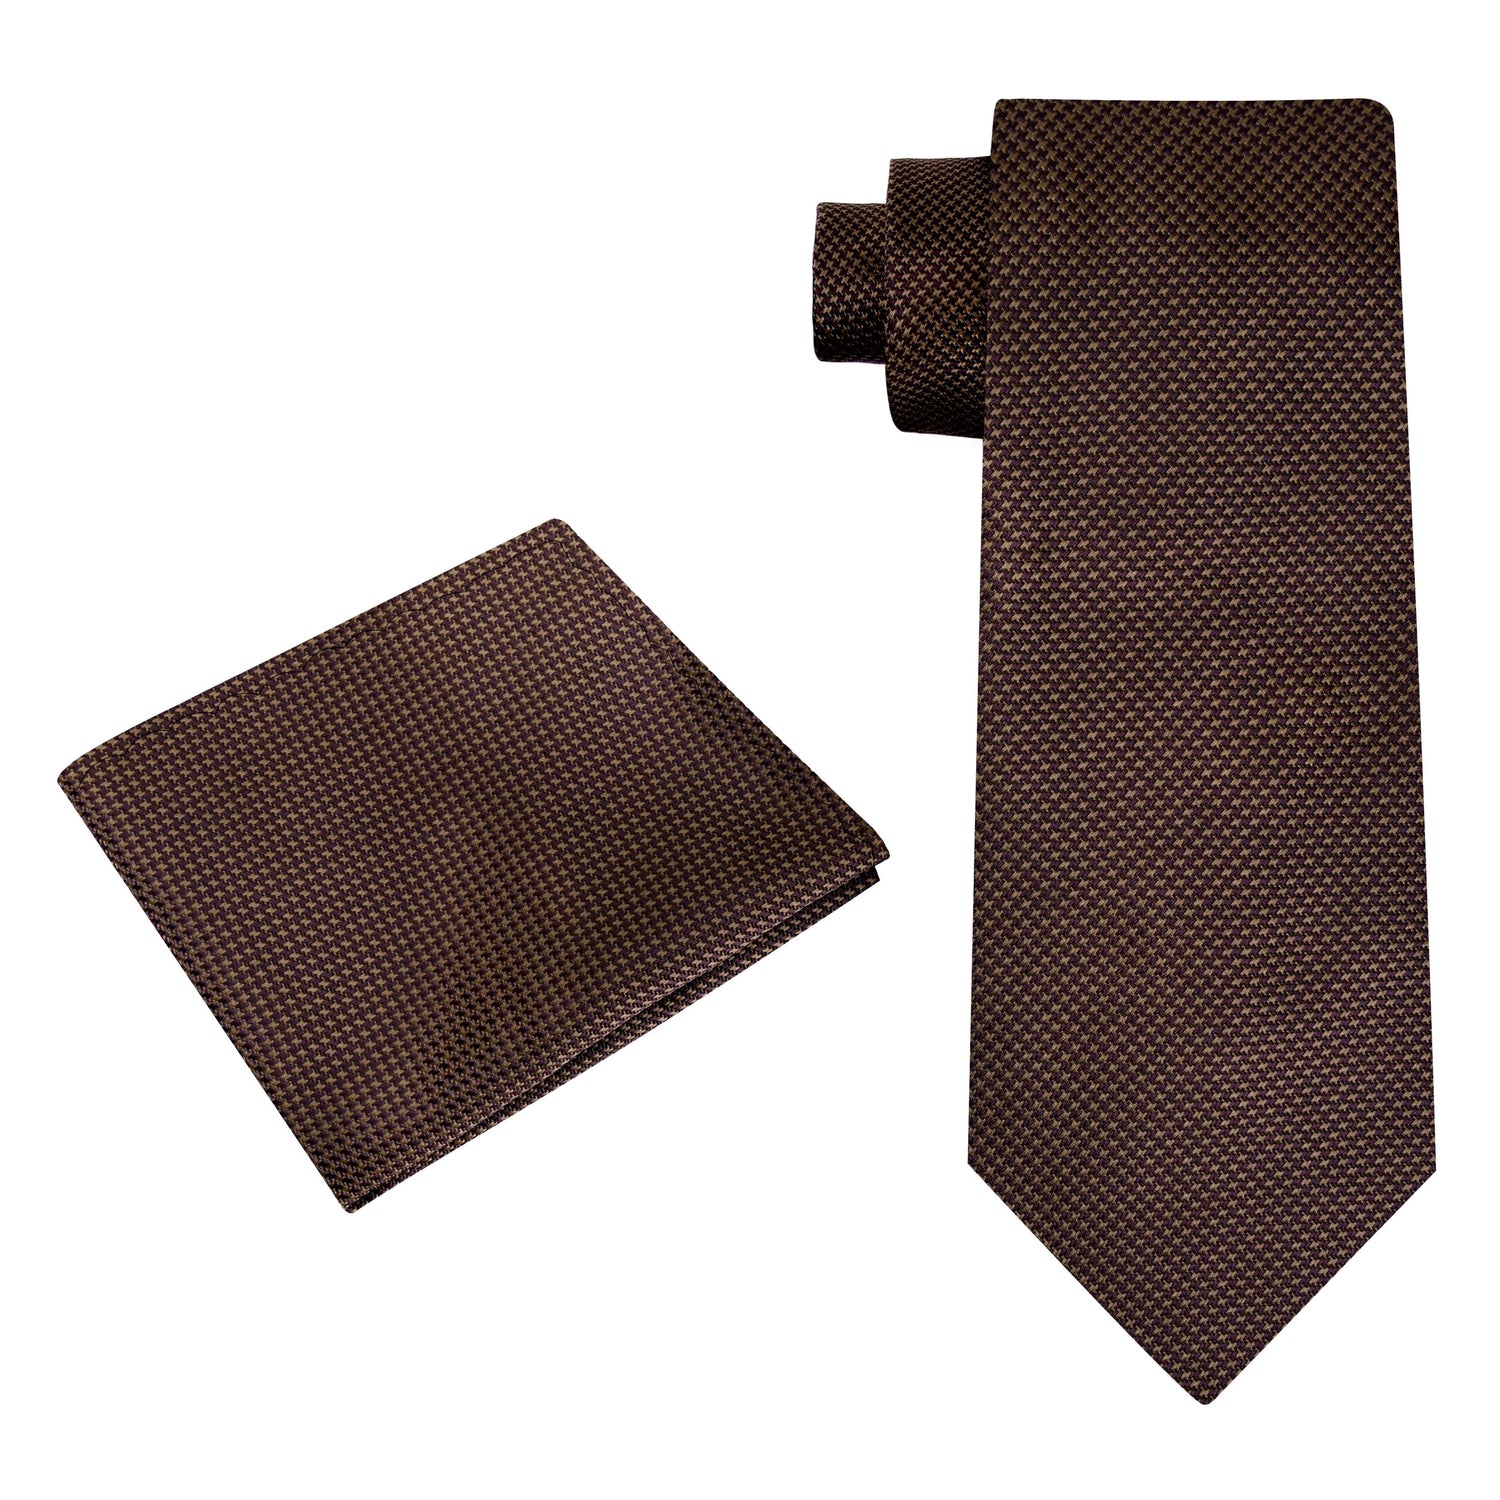 Alt View: A Brown Houndstooth Pattern Silk Necktie, Matching Pocket Square